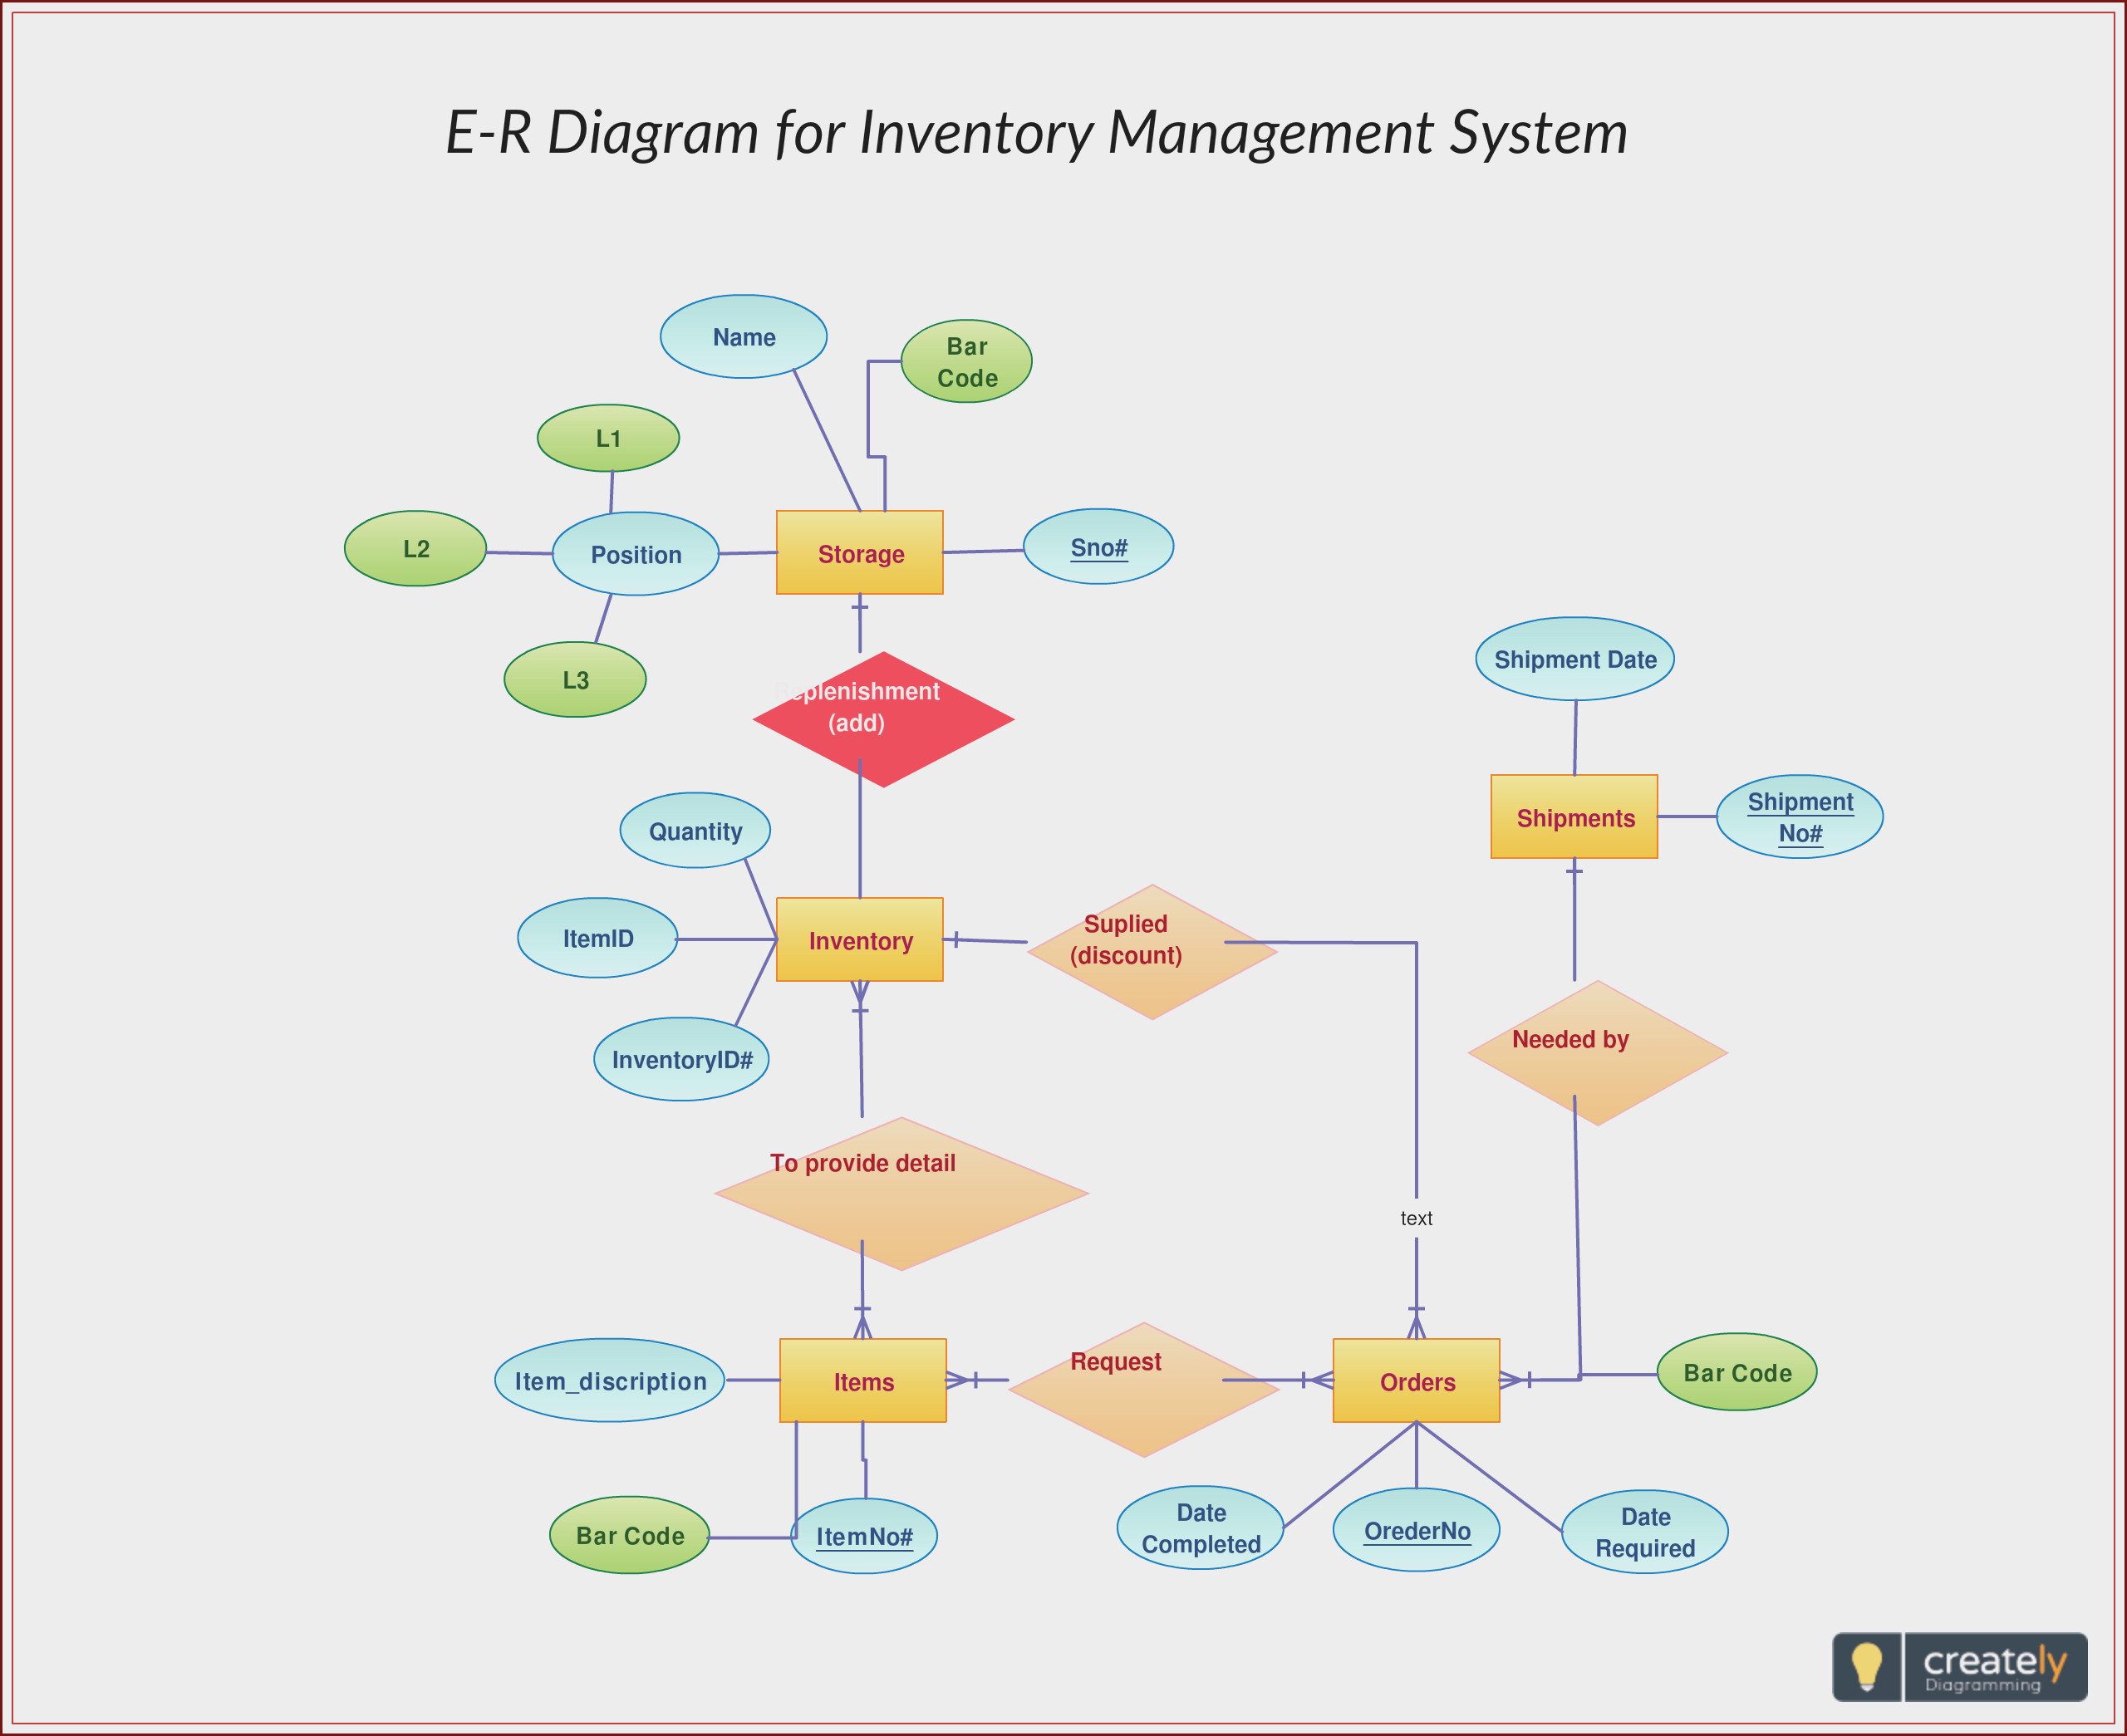 Hotel Management System Er Diagram Pdf At Manuals Library within Er Diagram